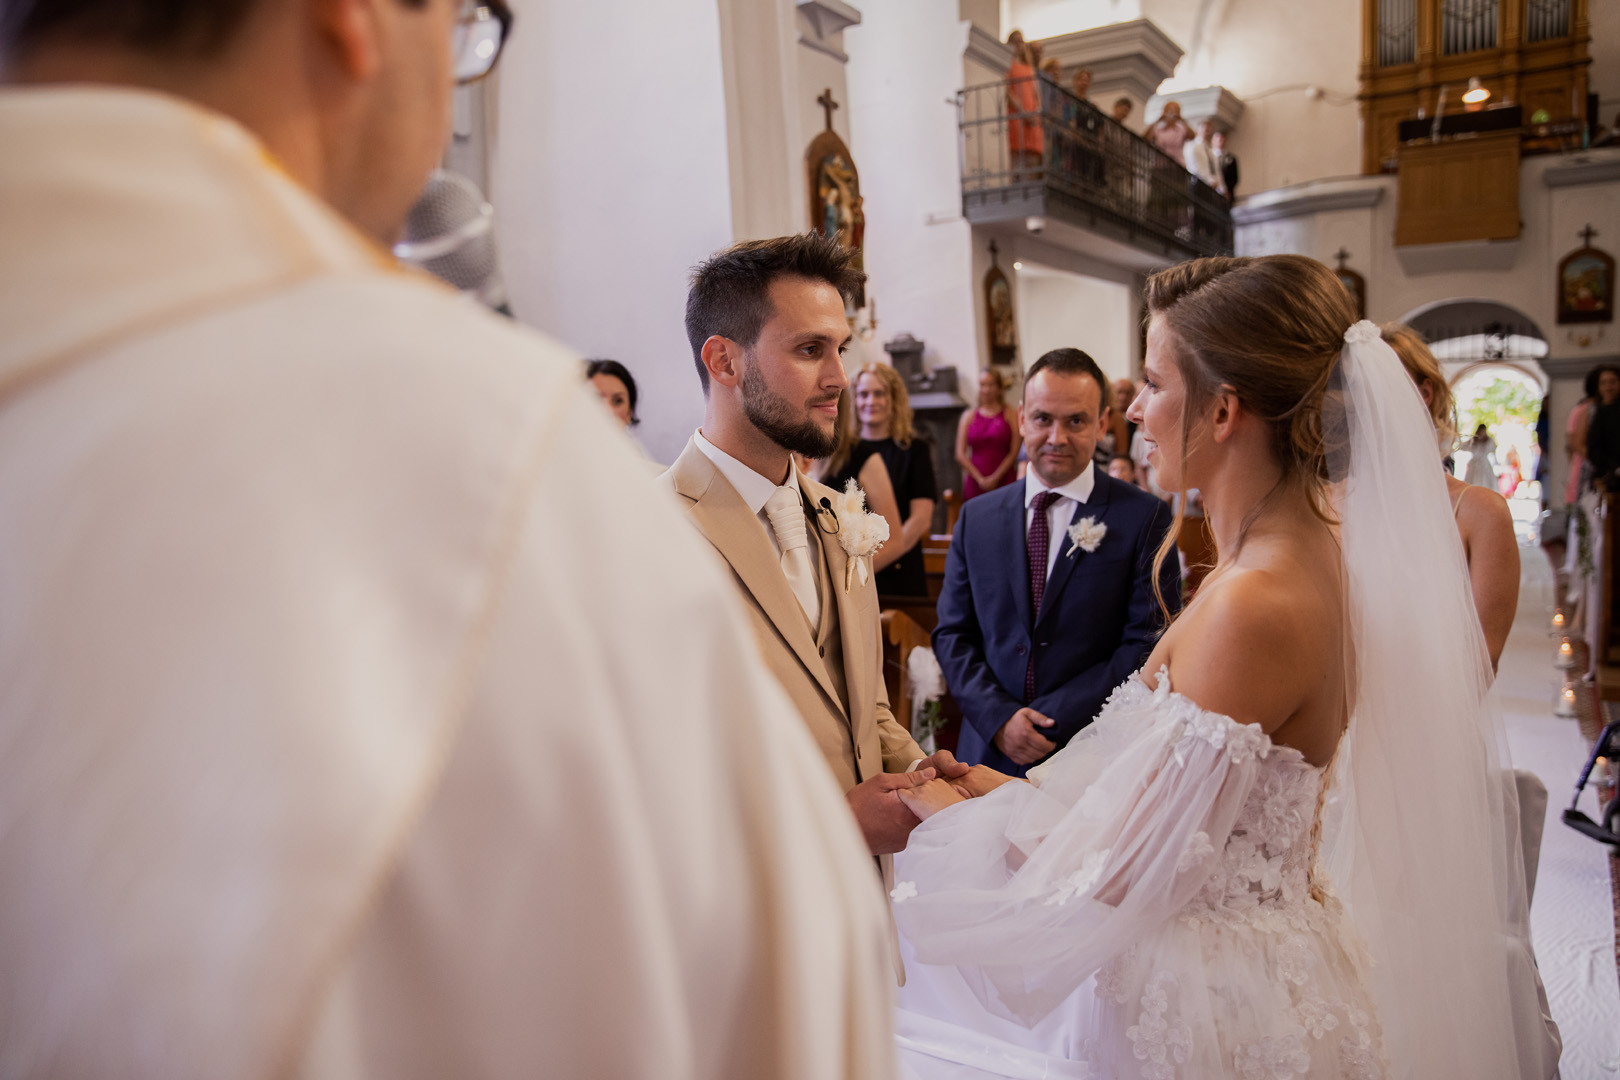 The beautiful wedding of Zuzka and Matúš - 0270.jpg